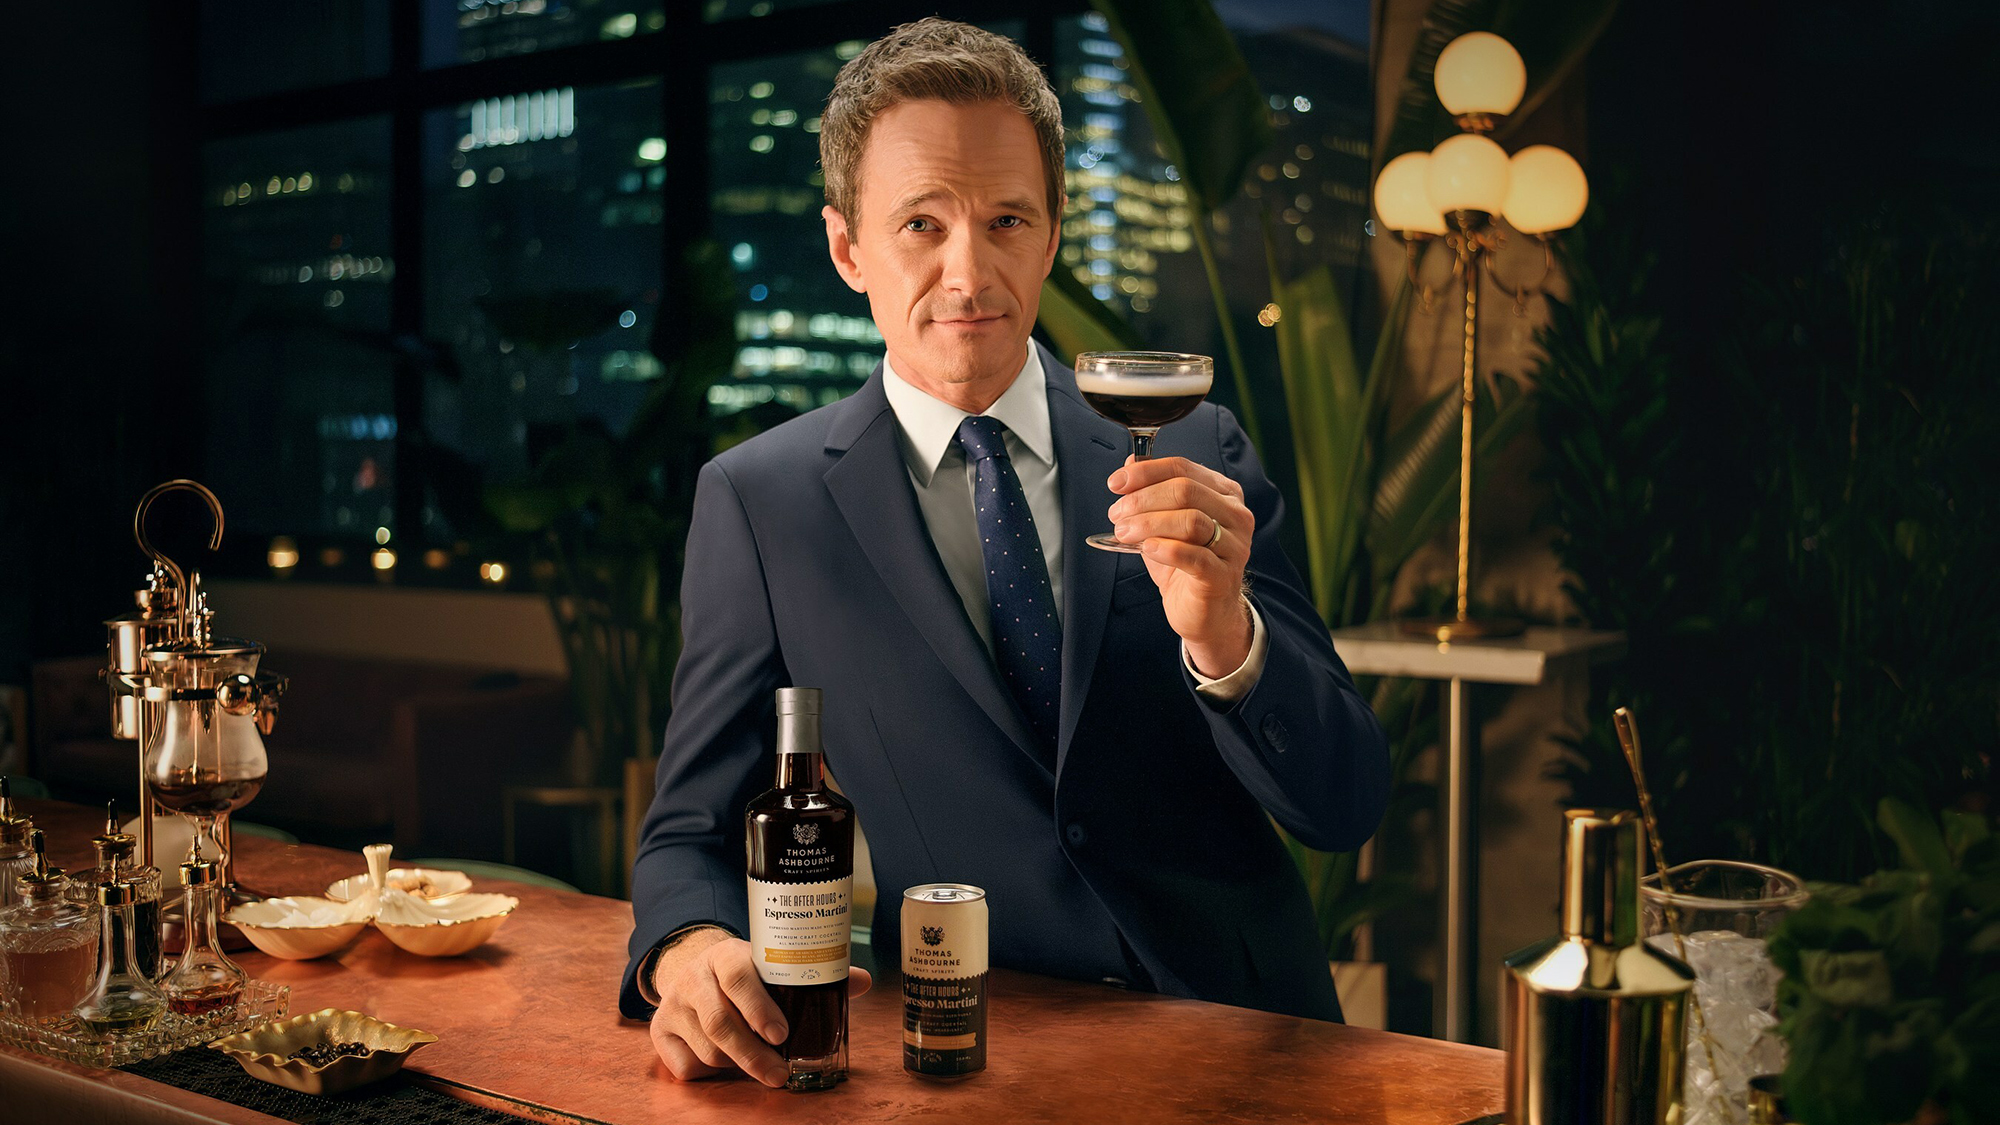 Neil Patrick Harris Now Has His Own Espresso Martini